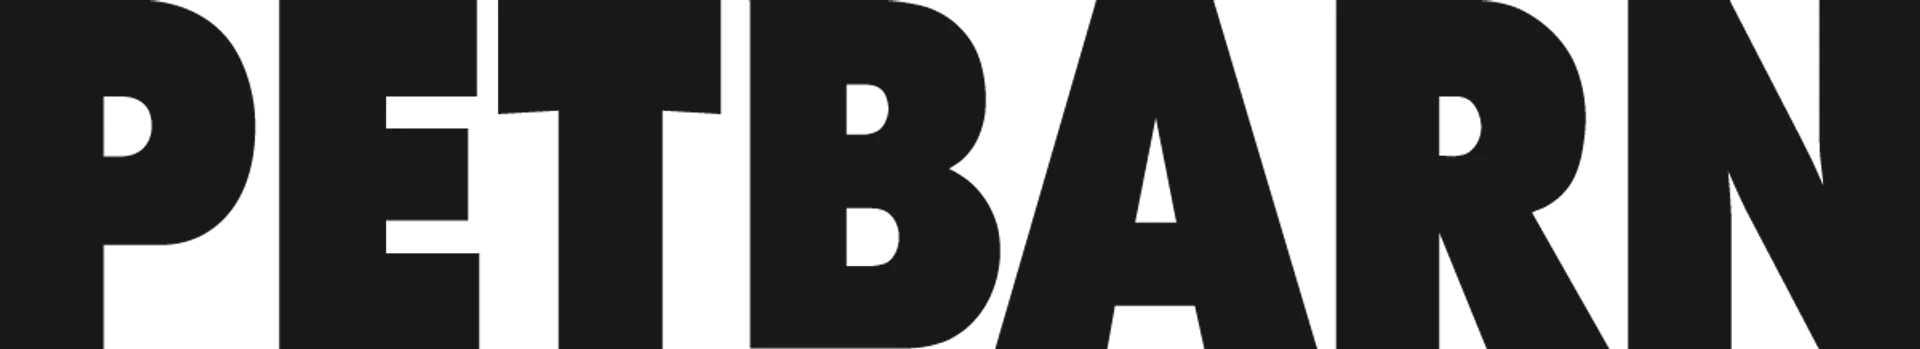 PETBARN logo of current catalogue